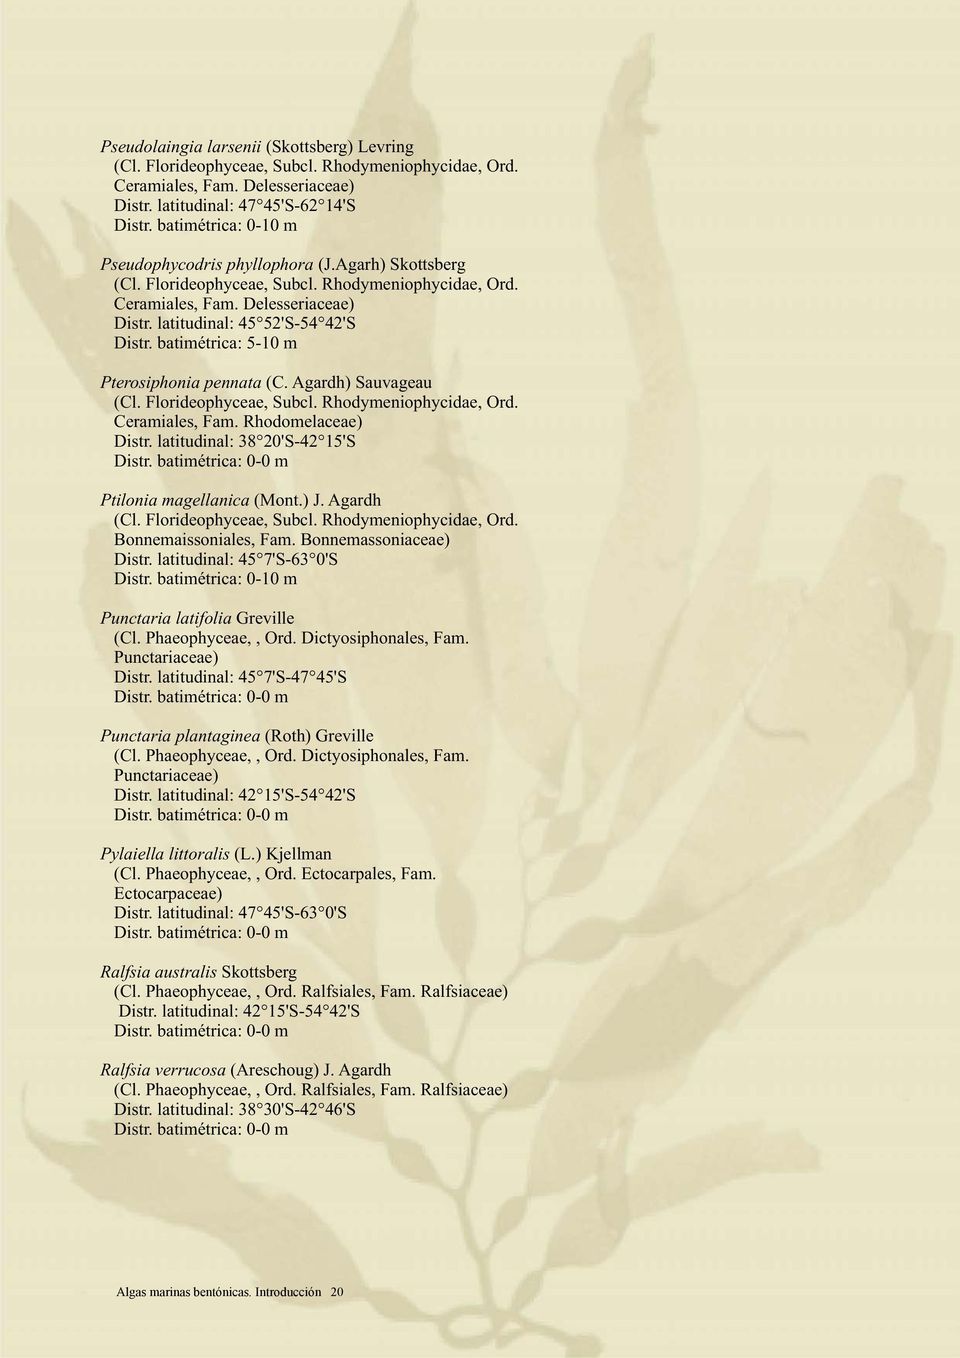 latitudinal: 38 20'S-42 15'S Ptilonia magellanica (Mont.) J. Agardh Bonnemaissoniales, Fam. Bonnemassoniaceae) Distr. latitudinal: 45 7'S-63 0'S Punctaria latifolia Greville (Cl. Phaeophyceae,, Ord.